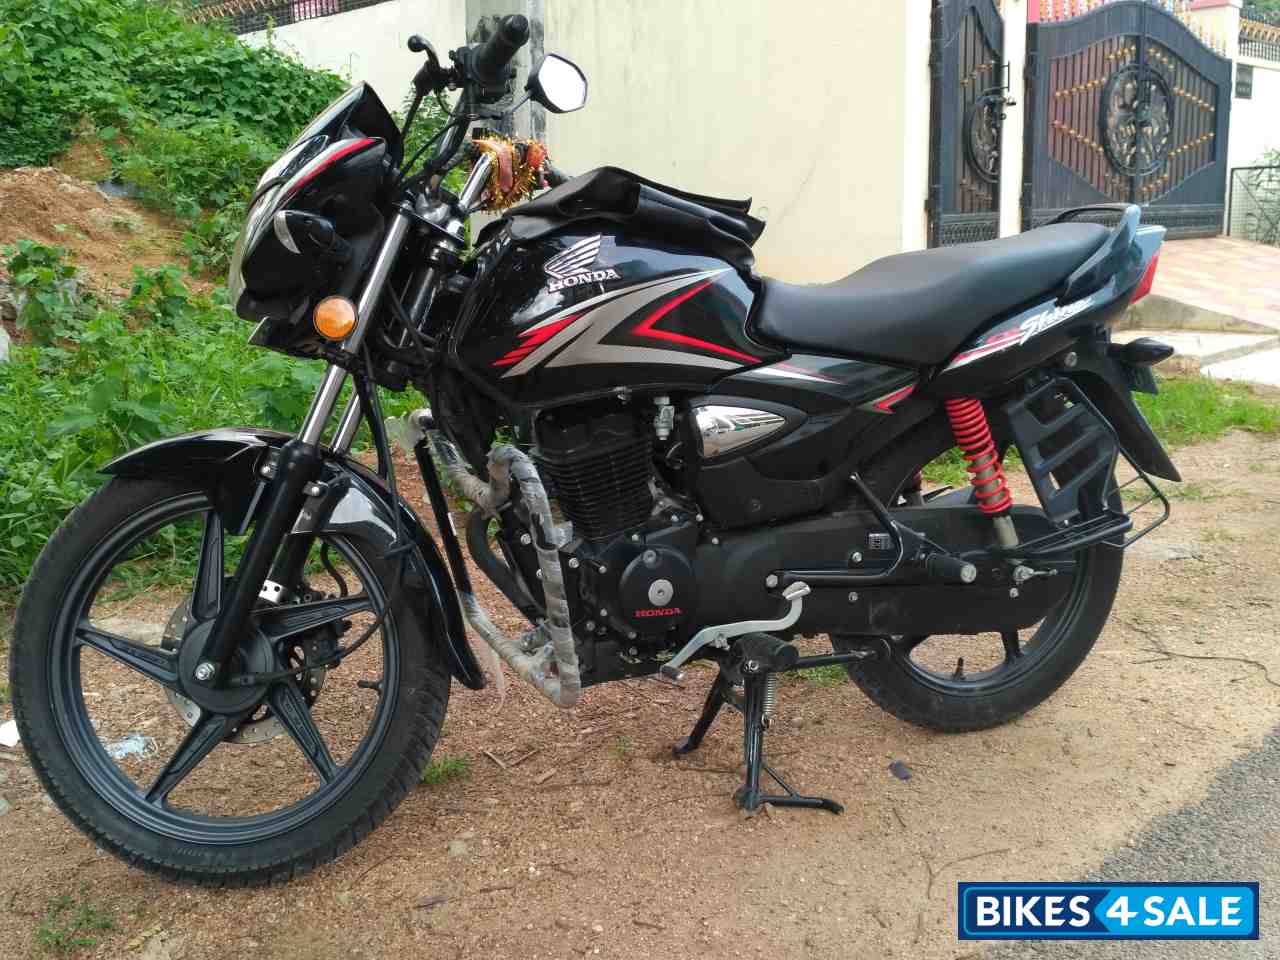 Shine Bike Price In Hyderabad 2019